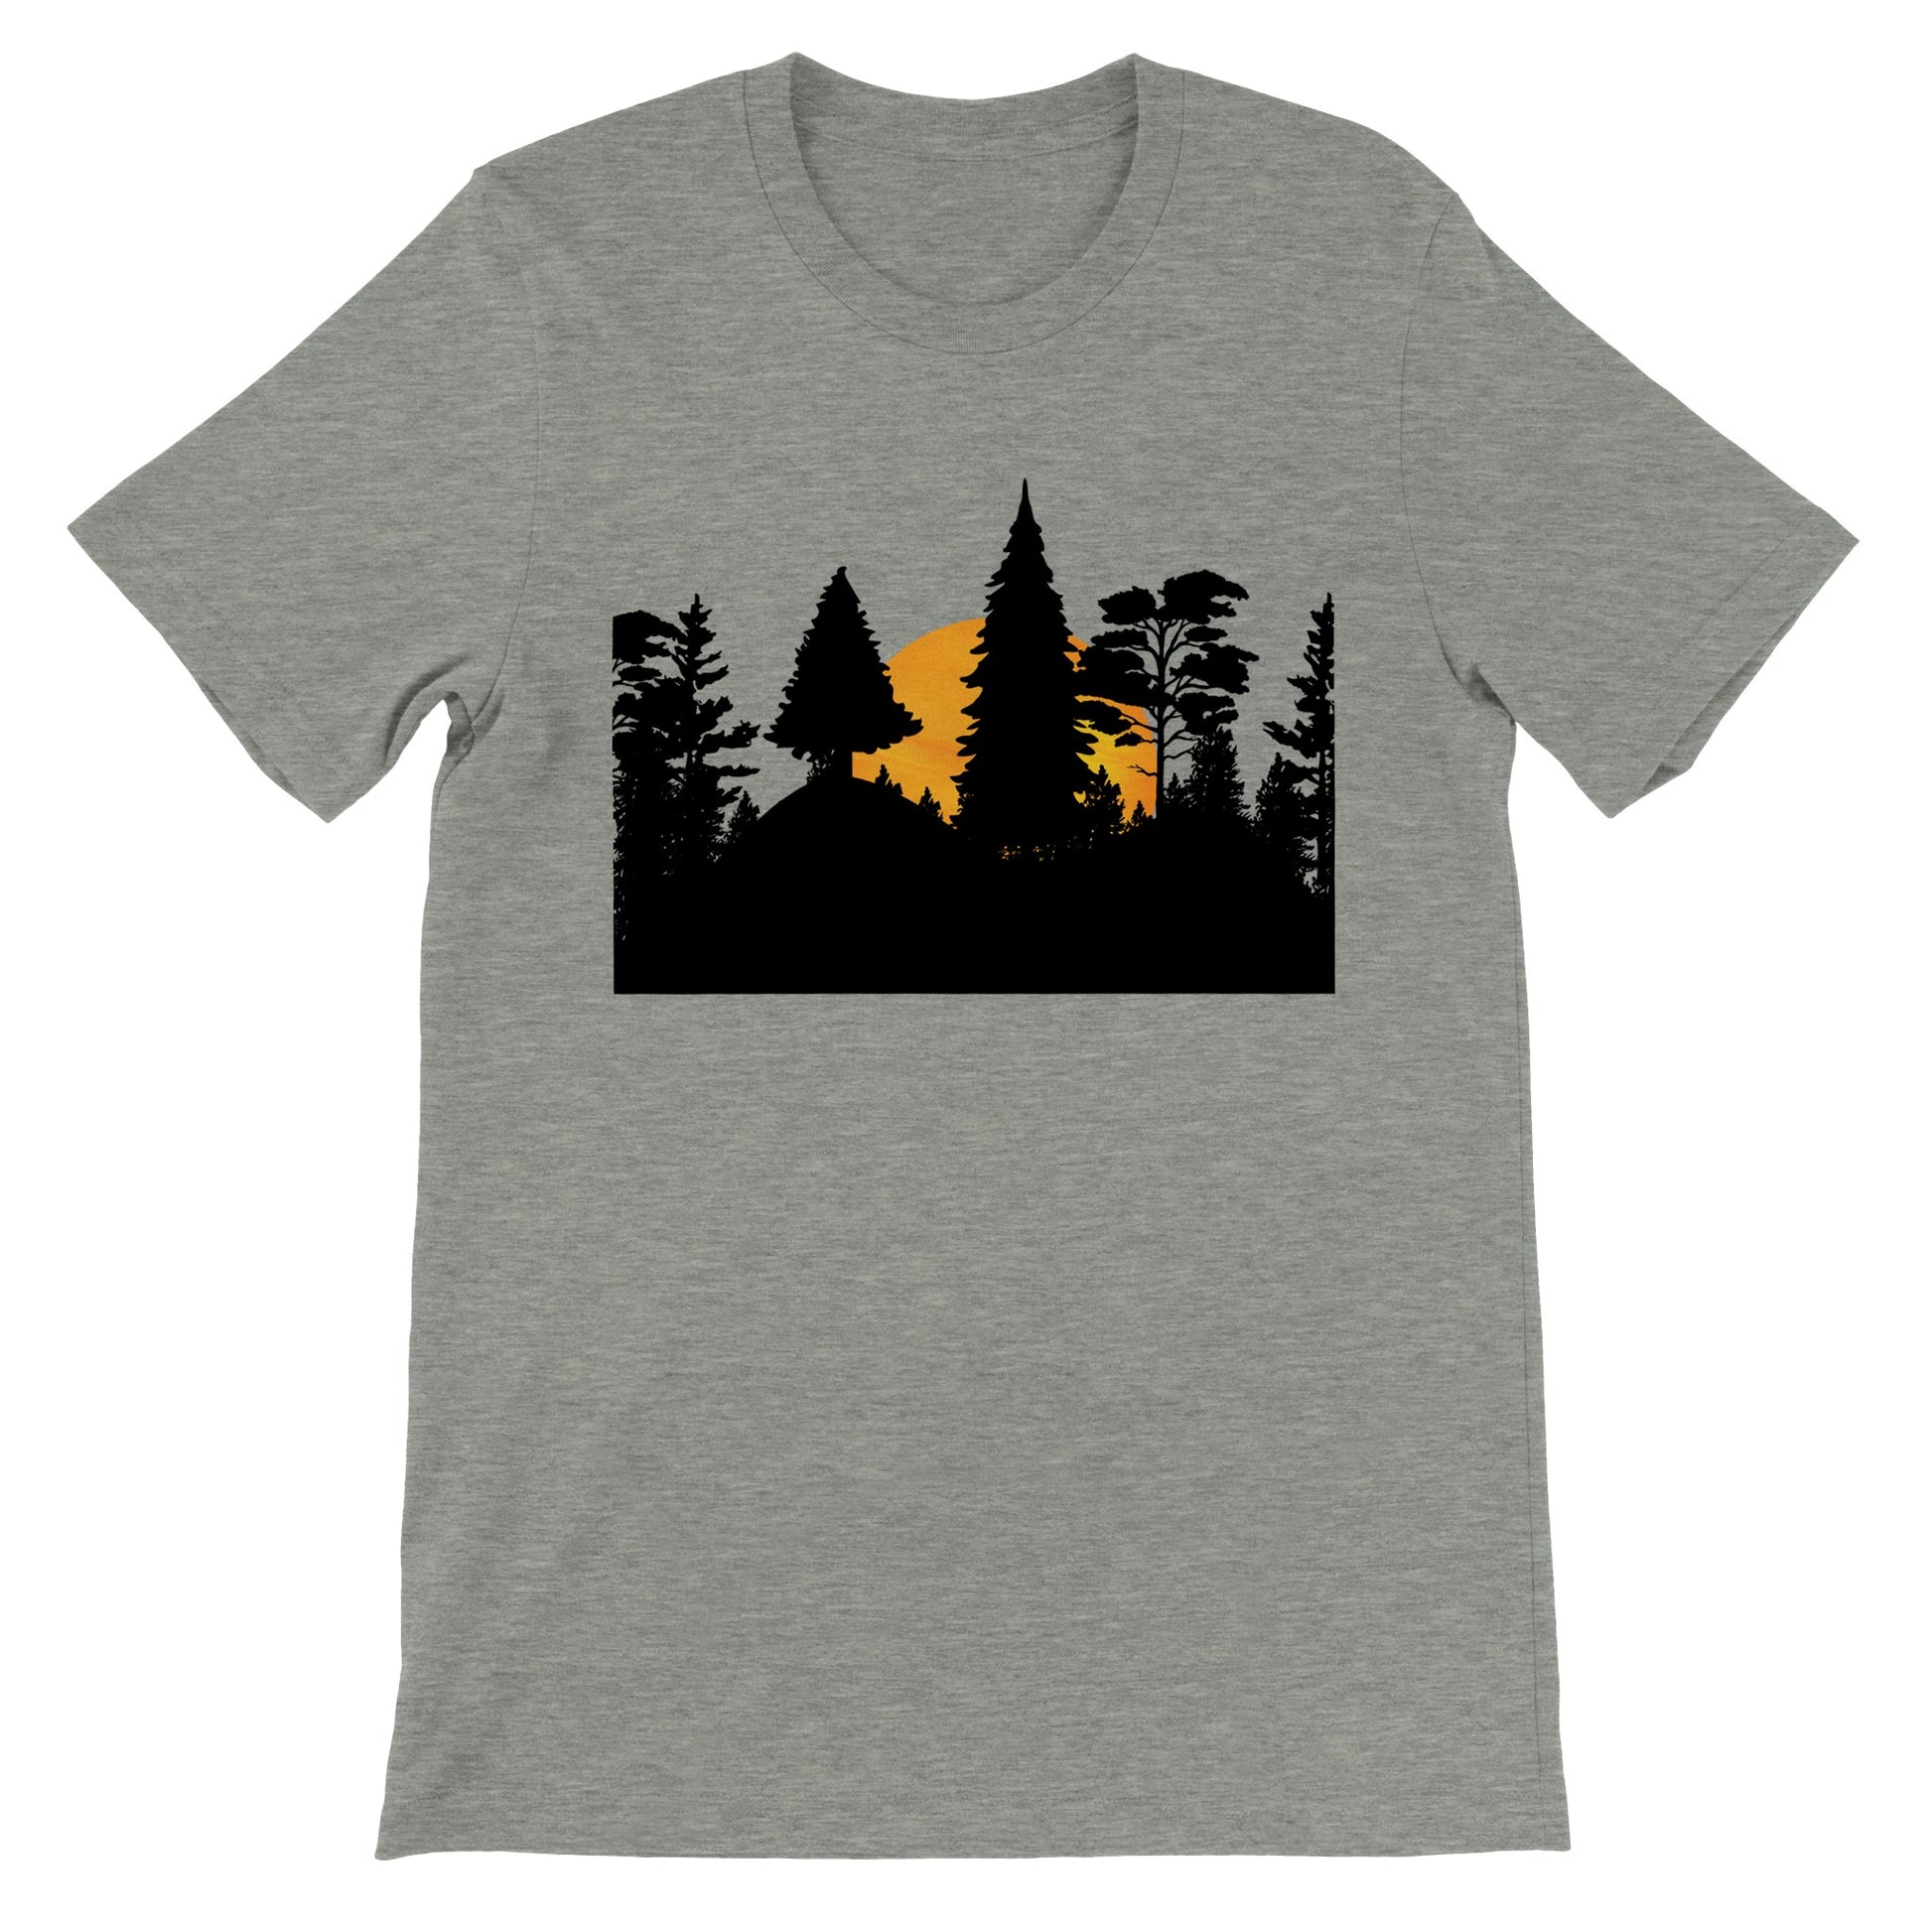 Camiseta gris para hombres con paisaje de pinos